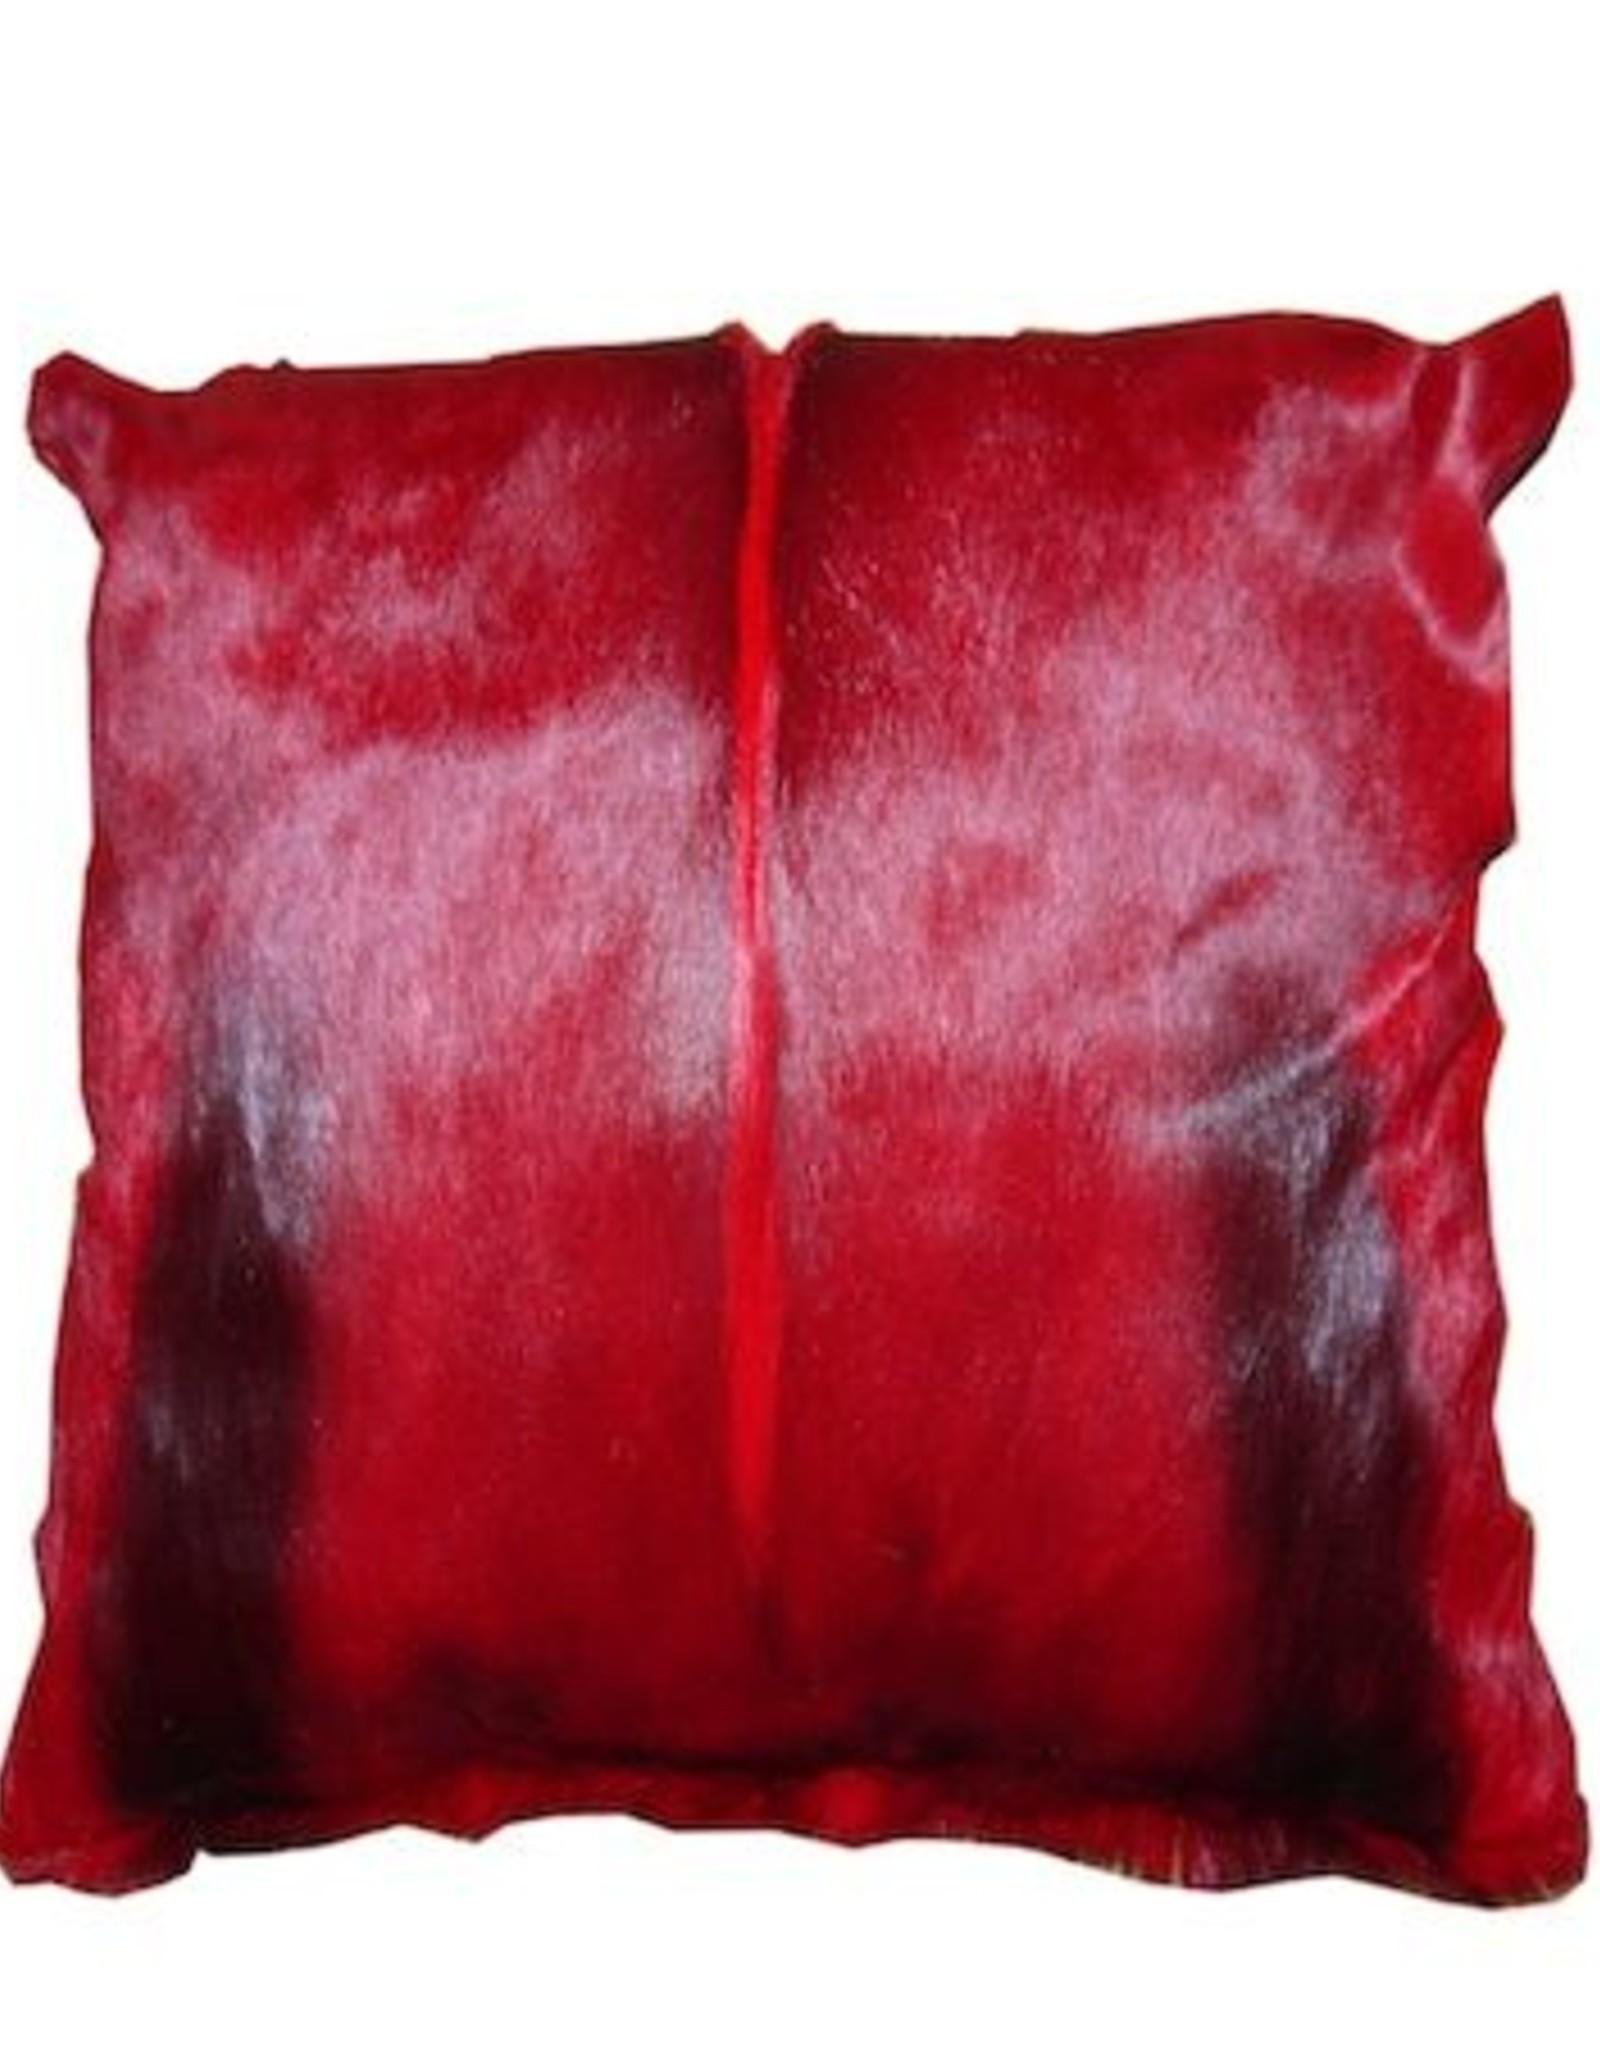 Springbok fur cushion red